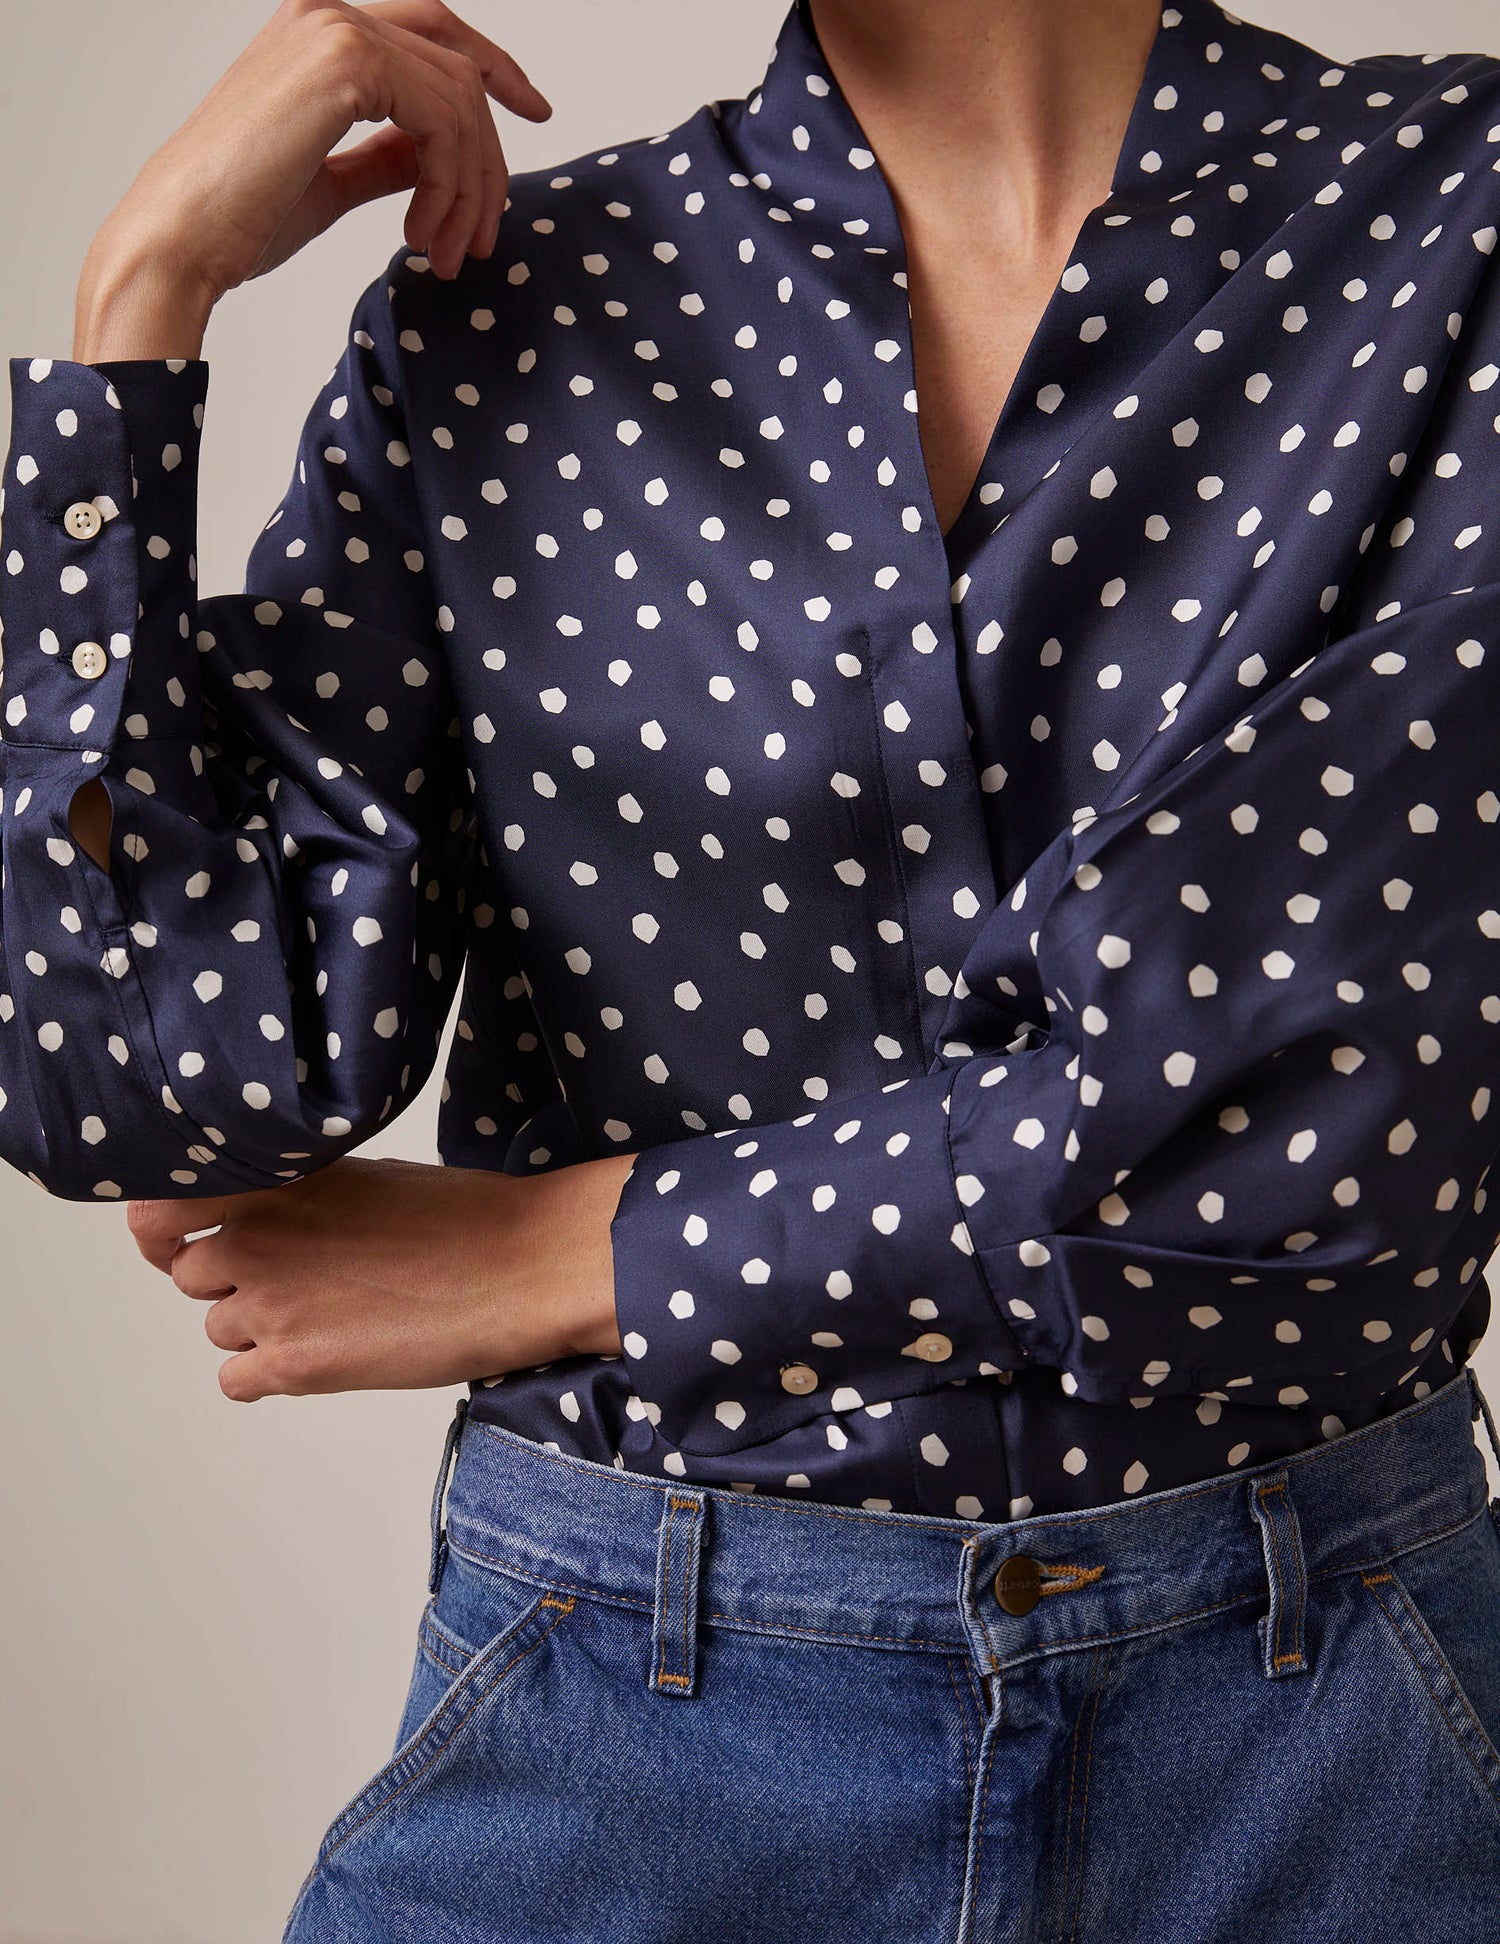 Ilena Hidden button placket navy blue shirt - Twill - Rising shawl Collar#3